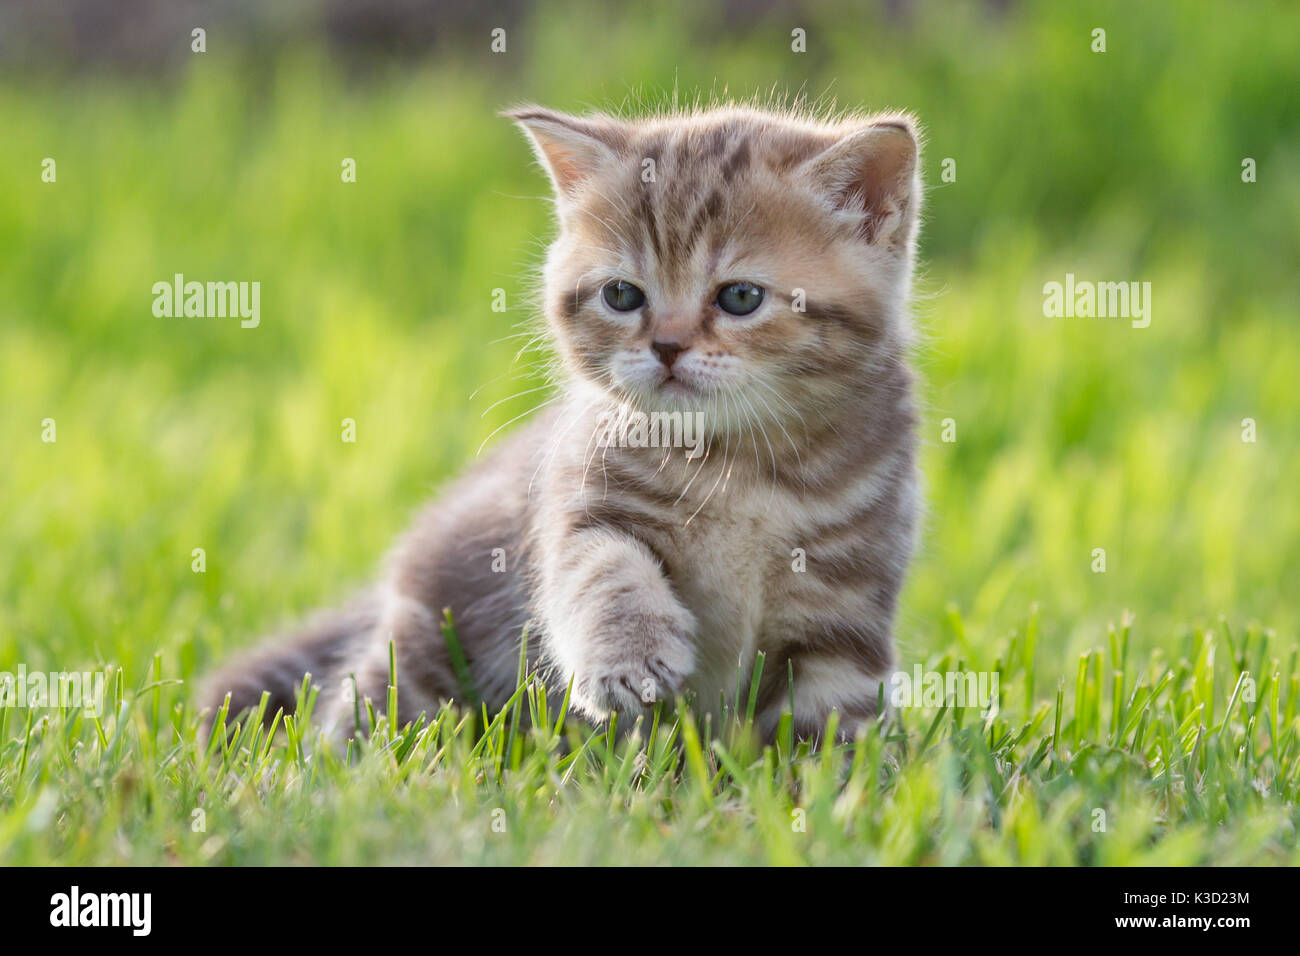 Bebé gato o gatito en la pasto verde Foto de stock